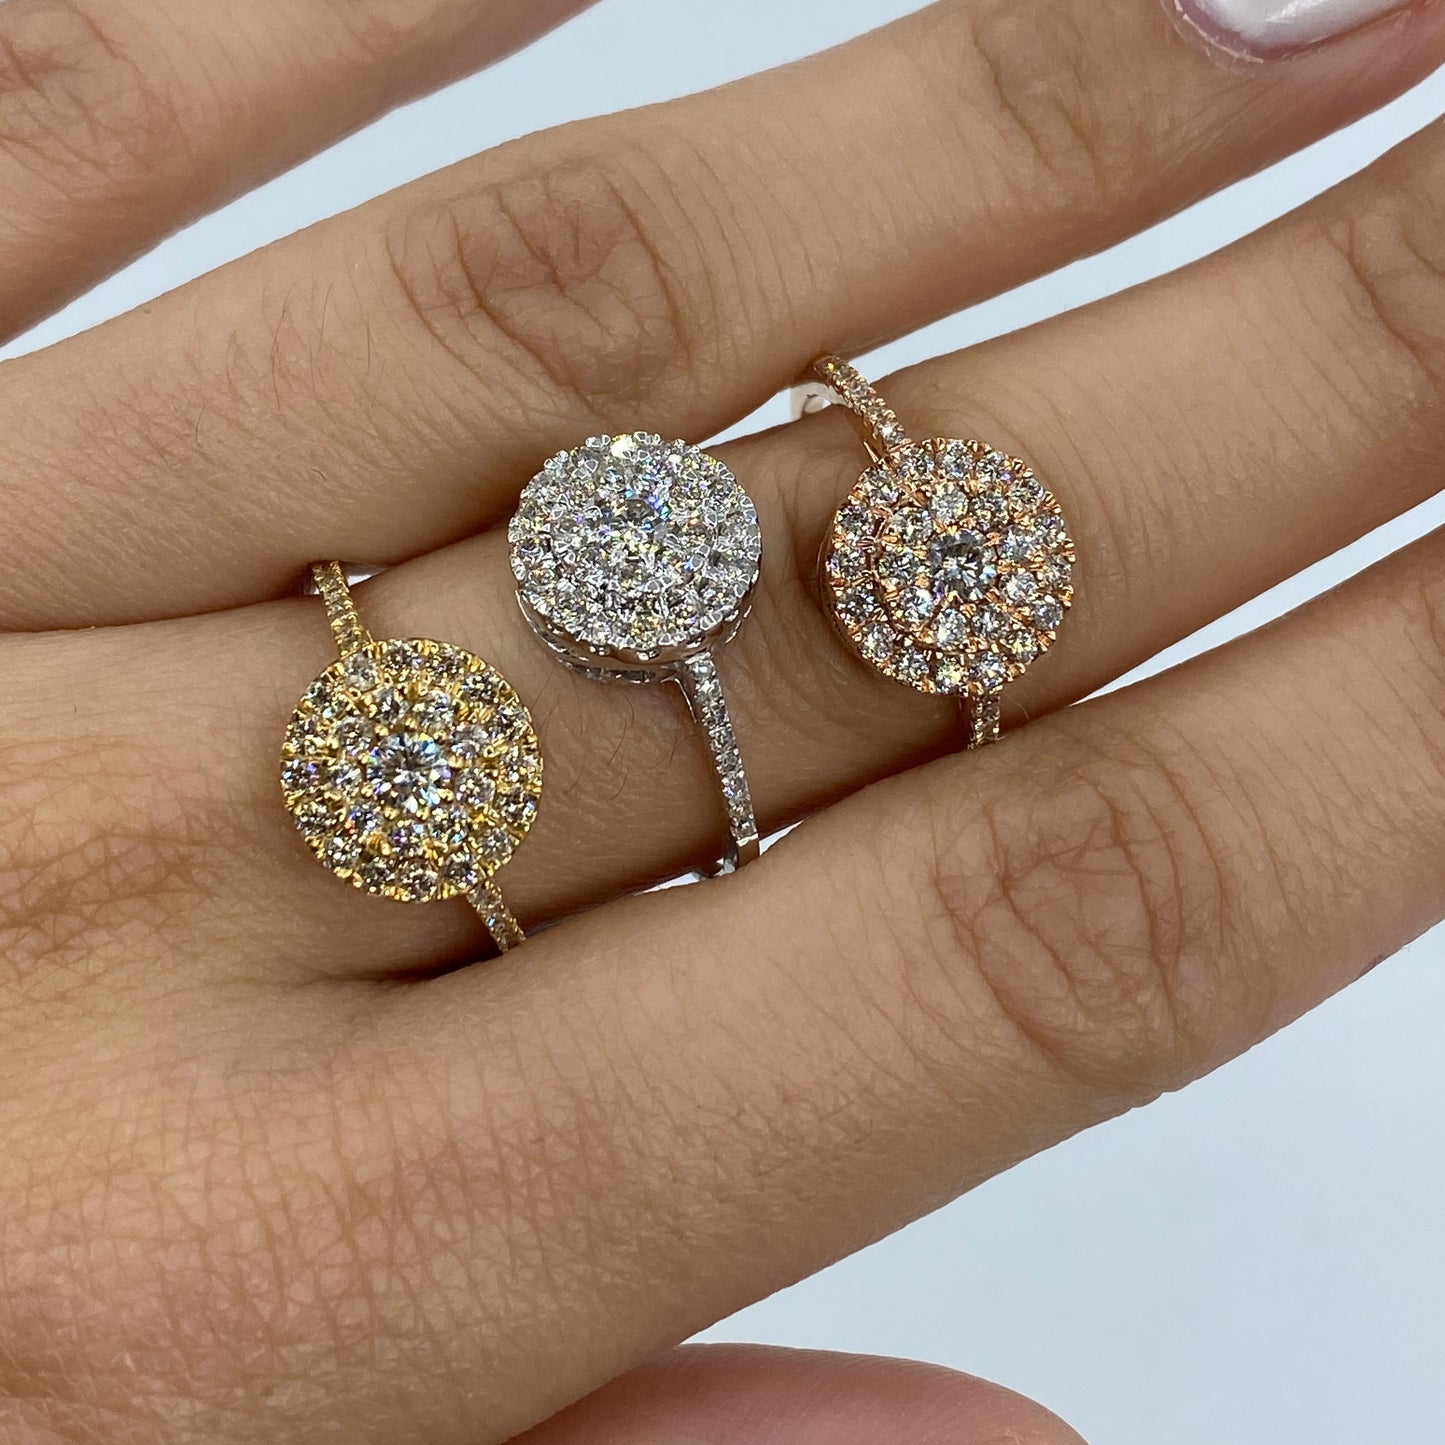 14K Circle Thin Band Diamond Engagement Ring